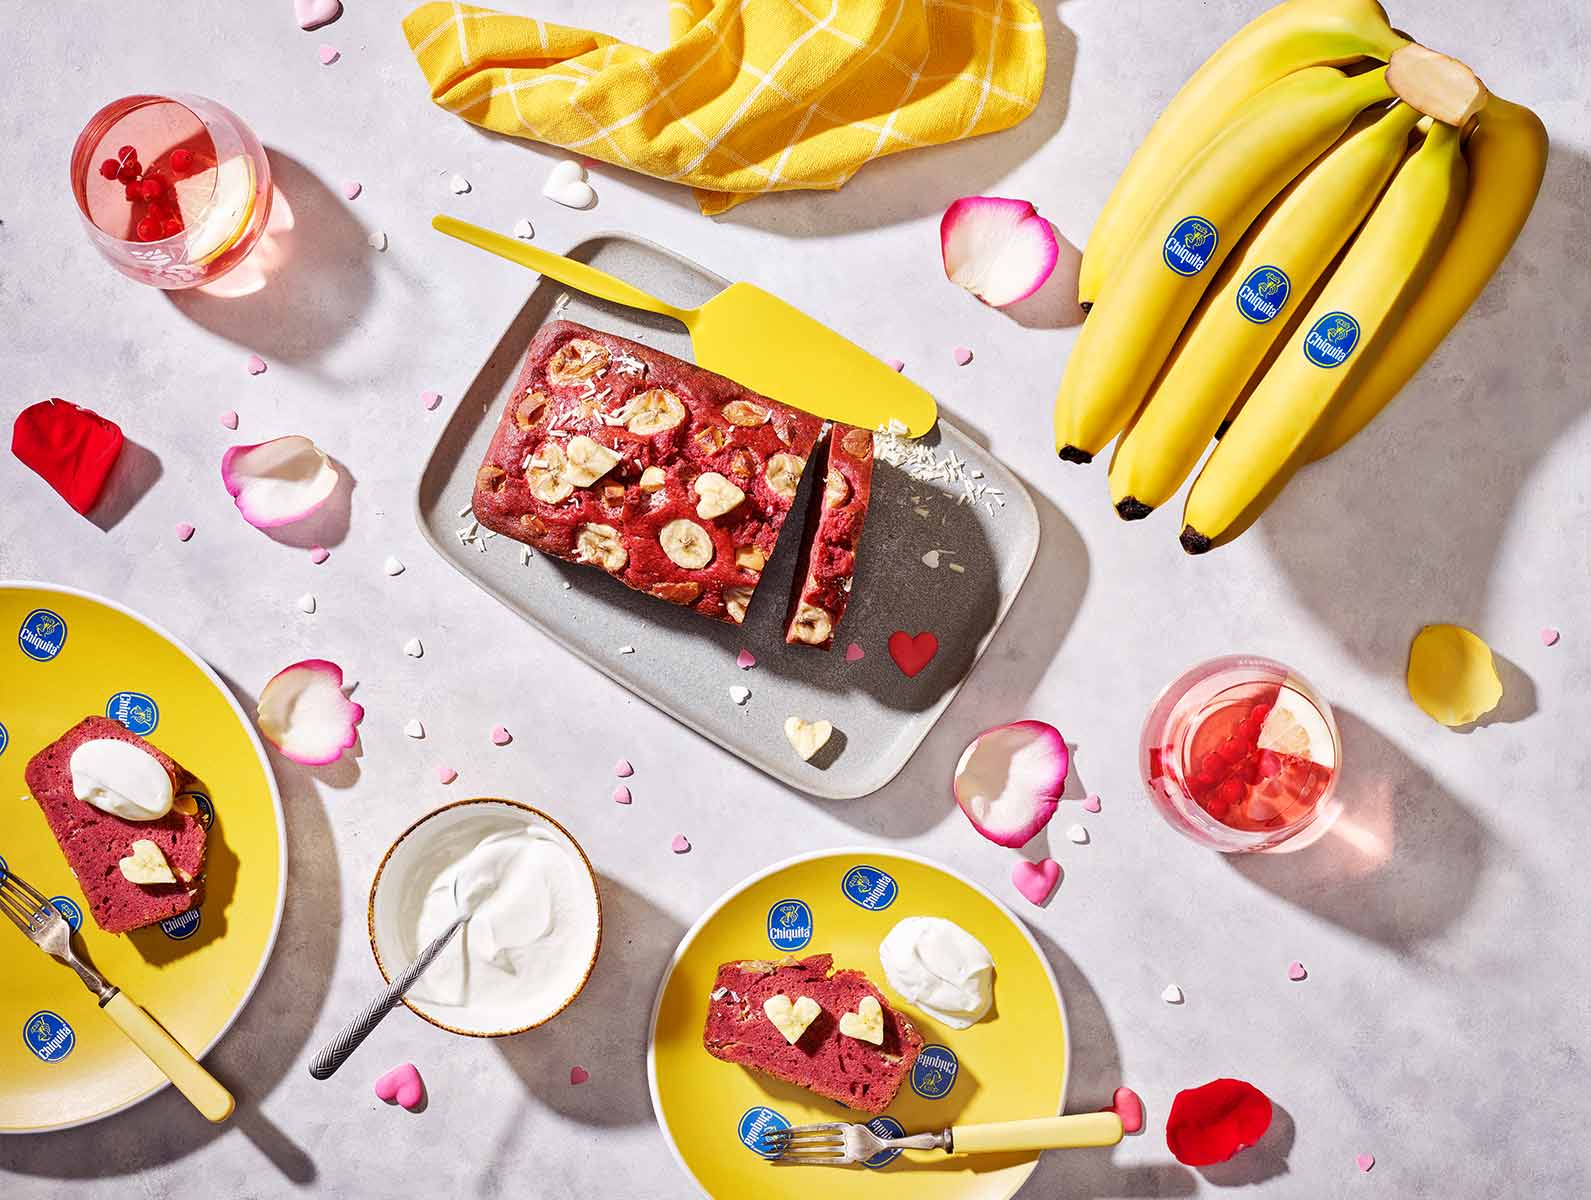 Red Velvet Μπανανόψωμο Chiquita για την ημέρα του Αγίου Βαλεντίνου